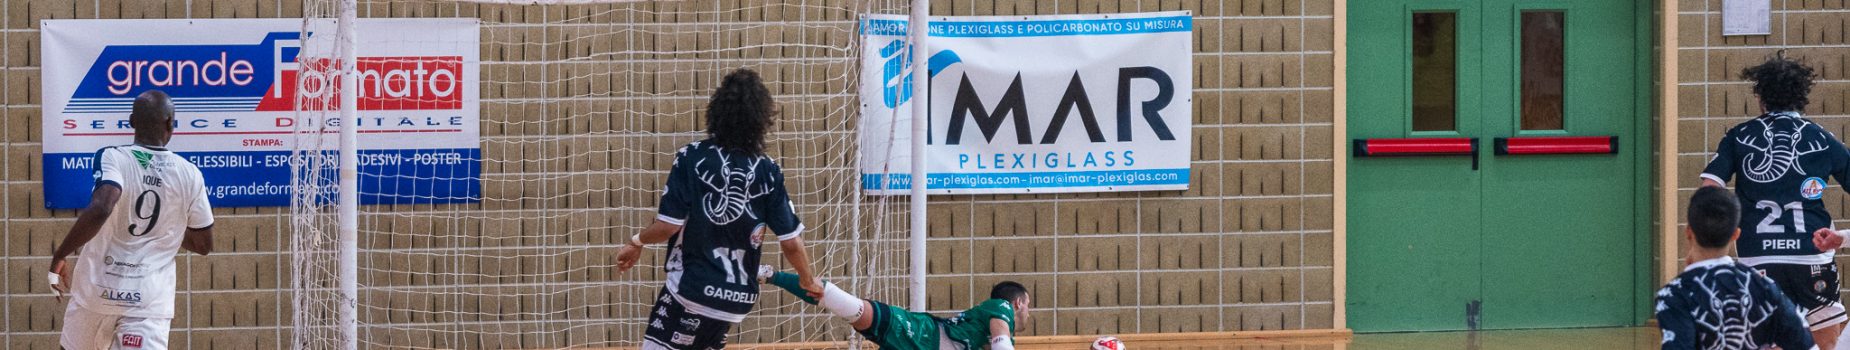 Manfredonia-Futsal Cesena posticipata al 13 febbraio